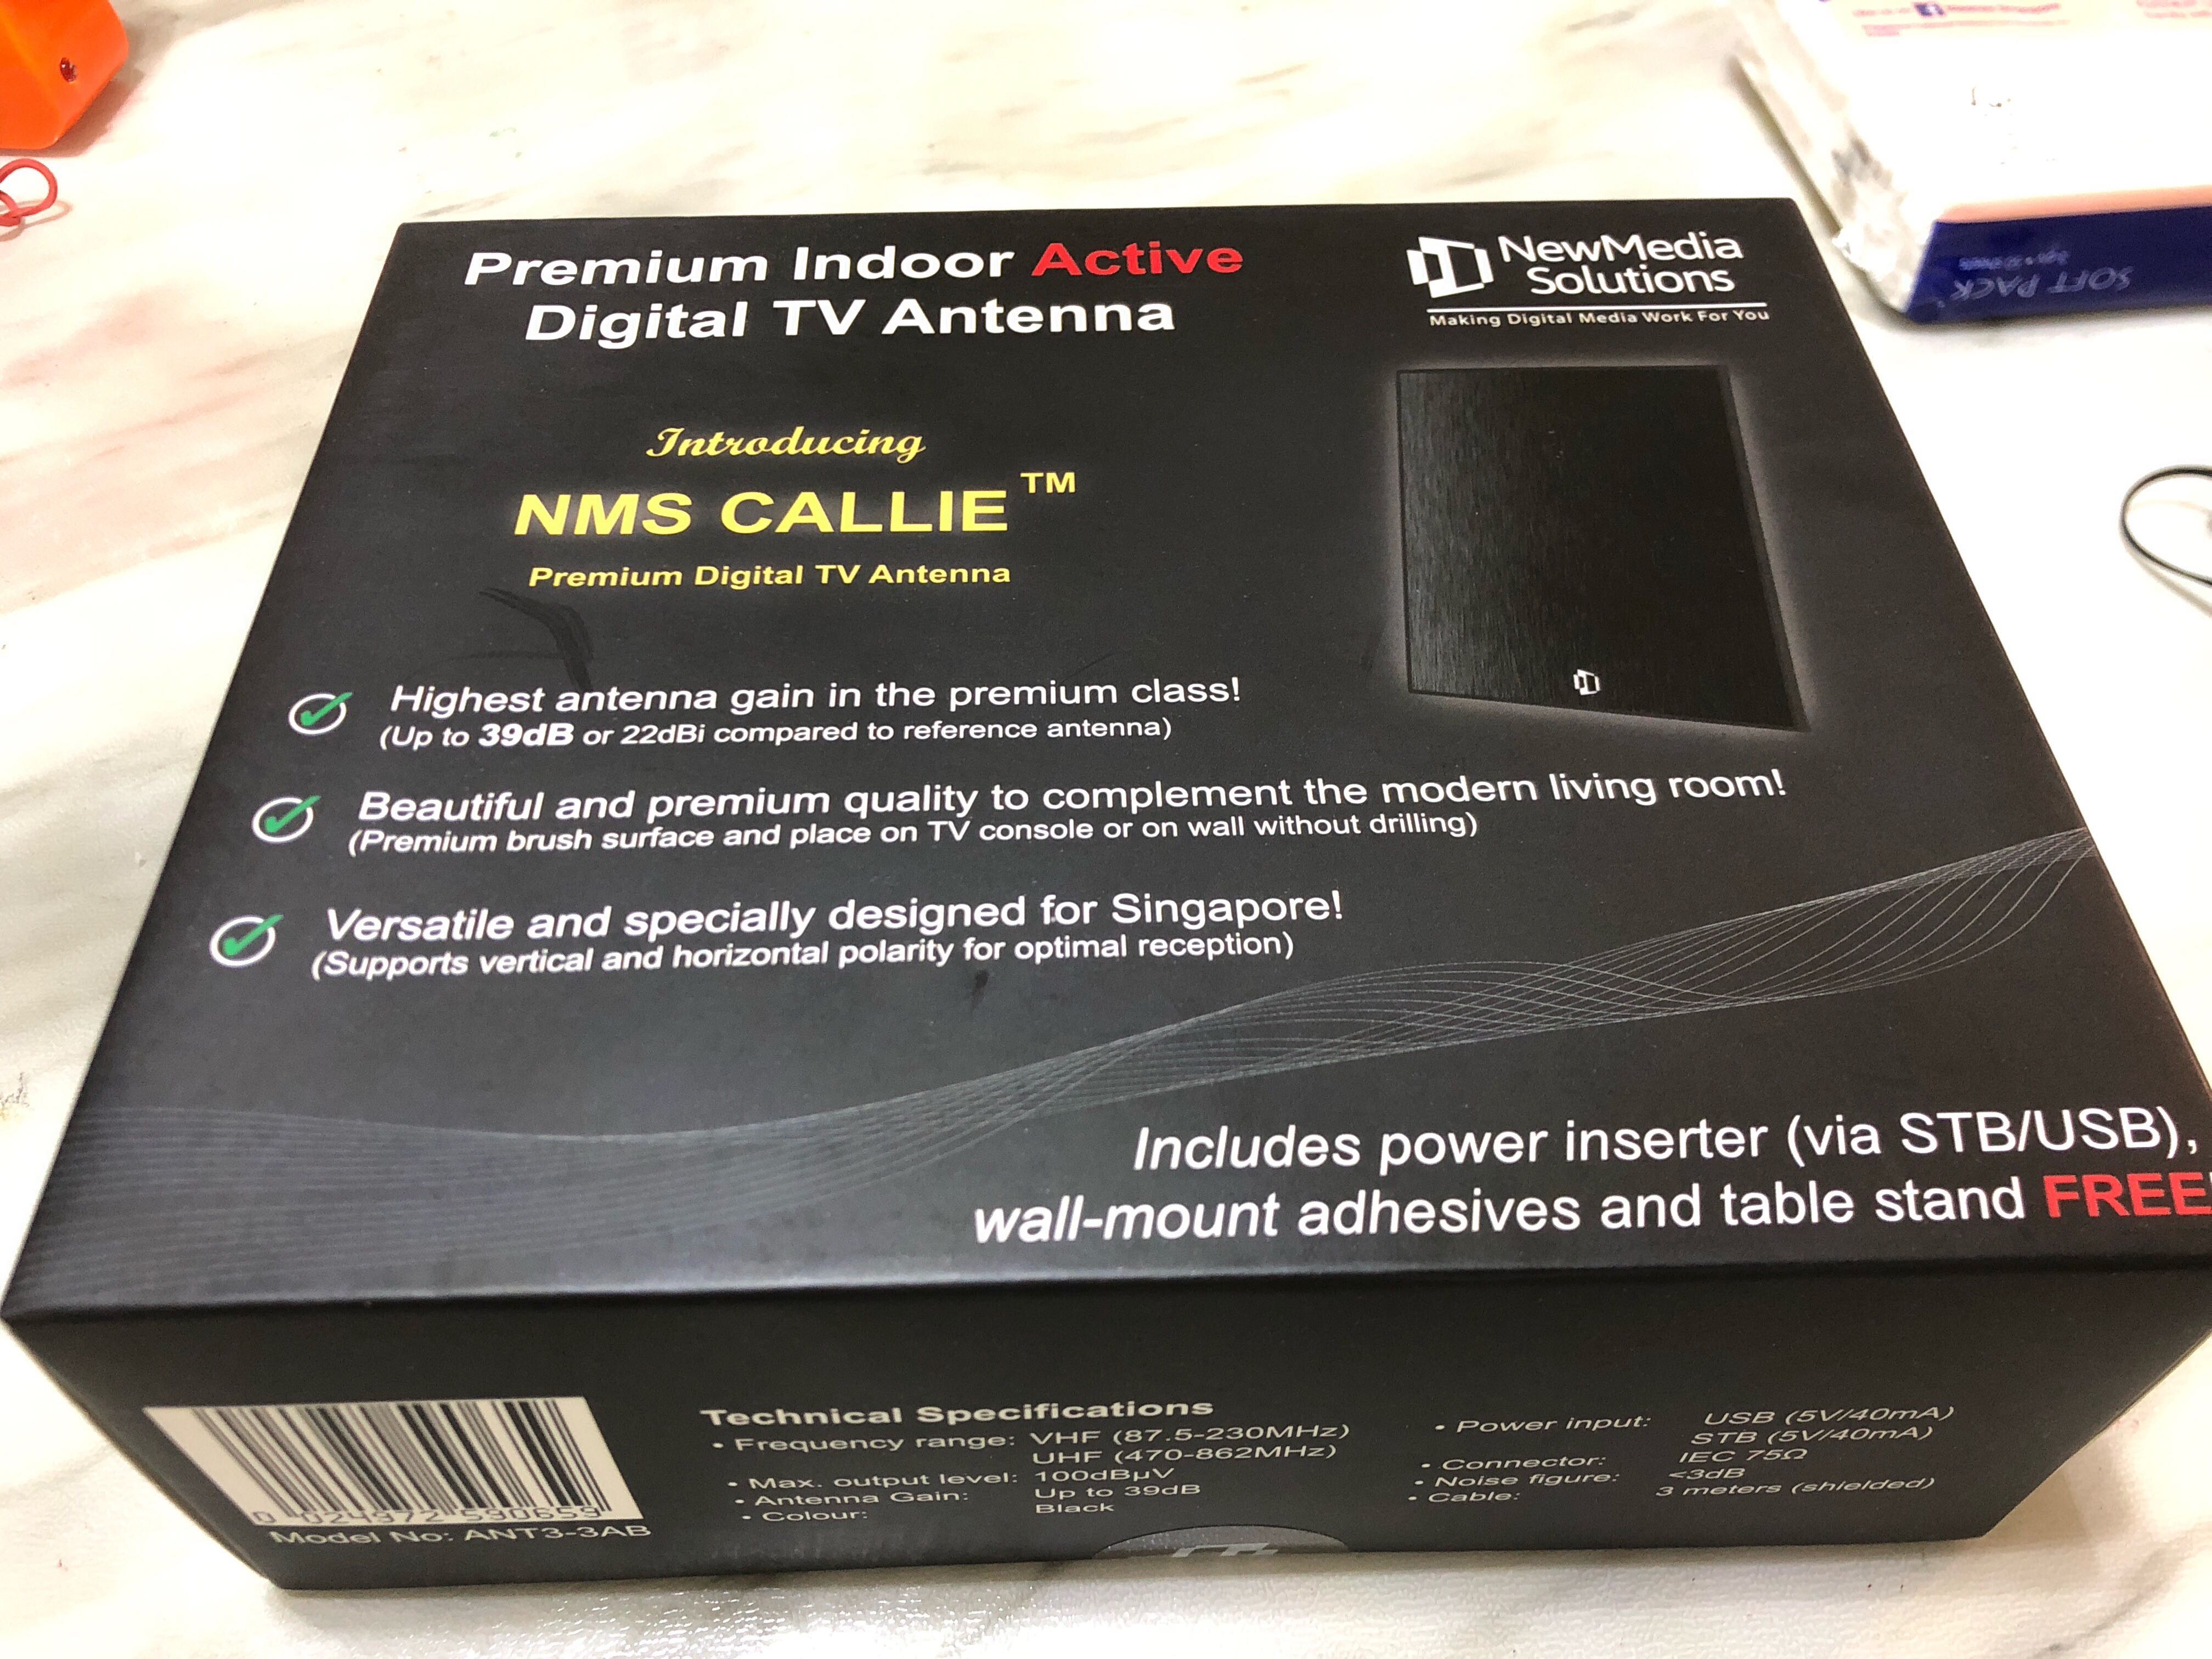 nms_callie_premium_digital_tv_antenna_1526996122_43909b7b.jpg